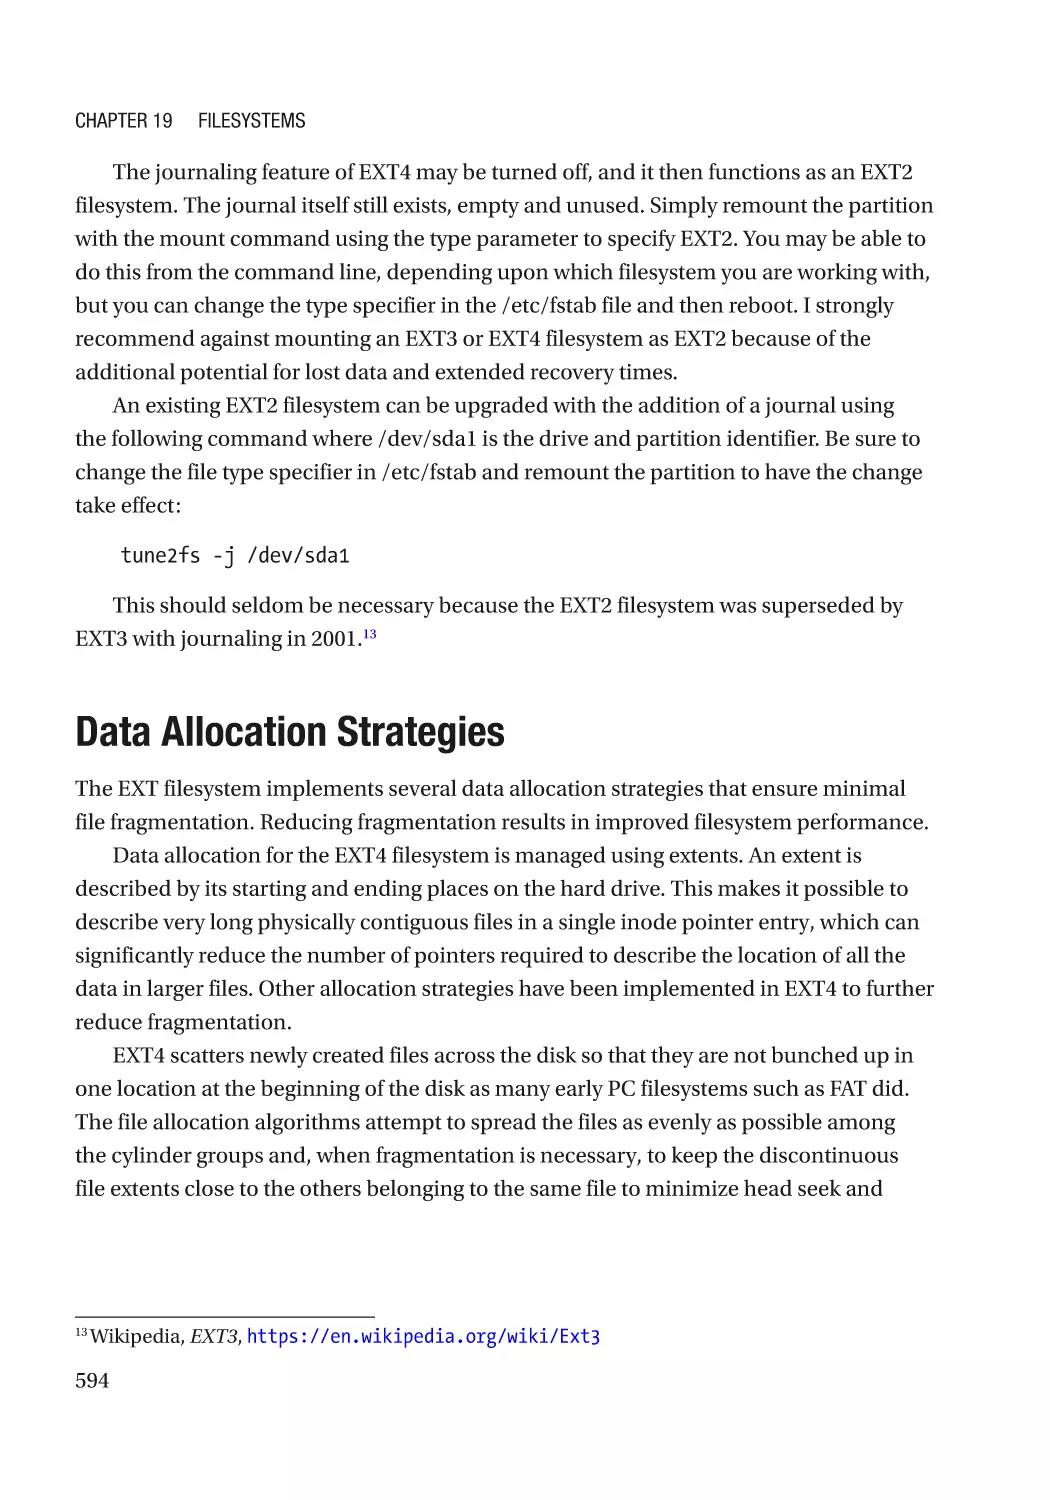 Data Allocation Strategies